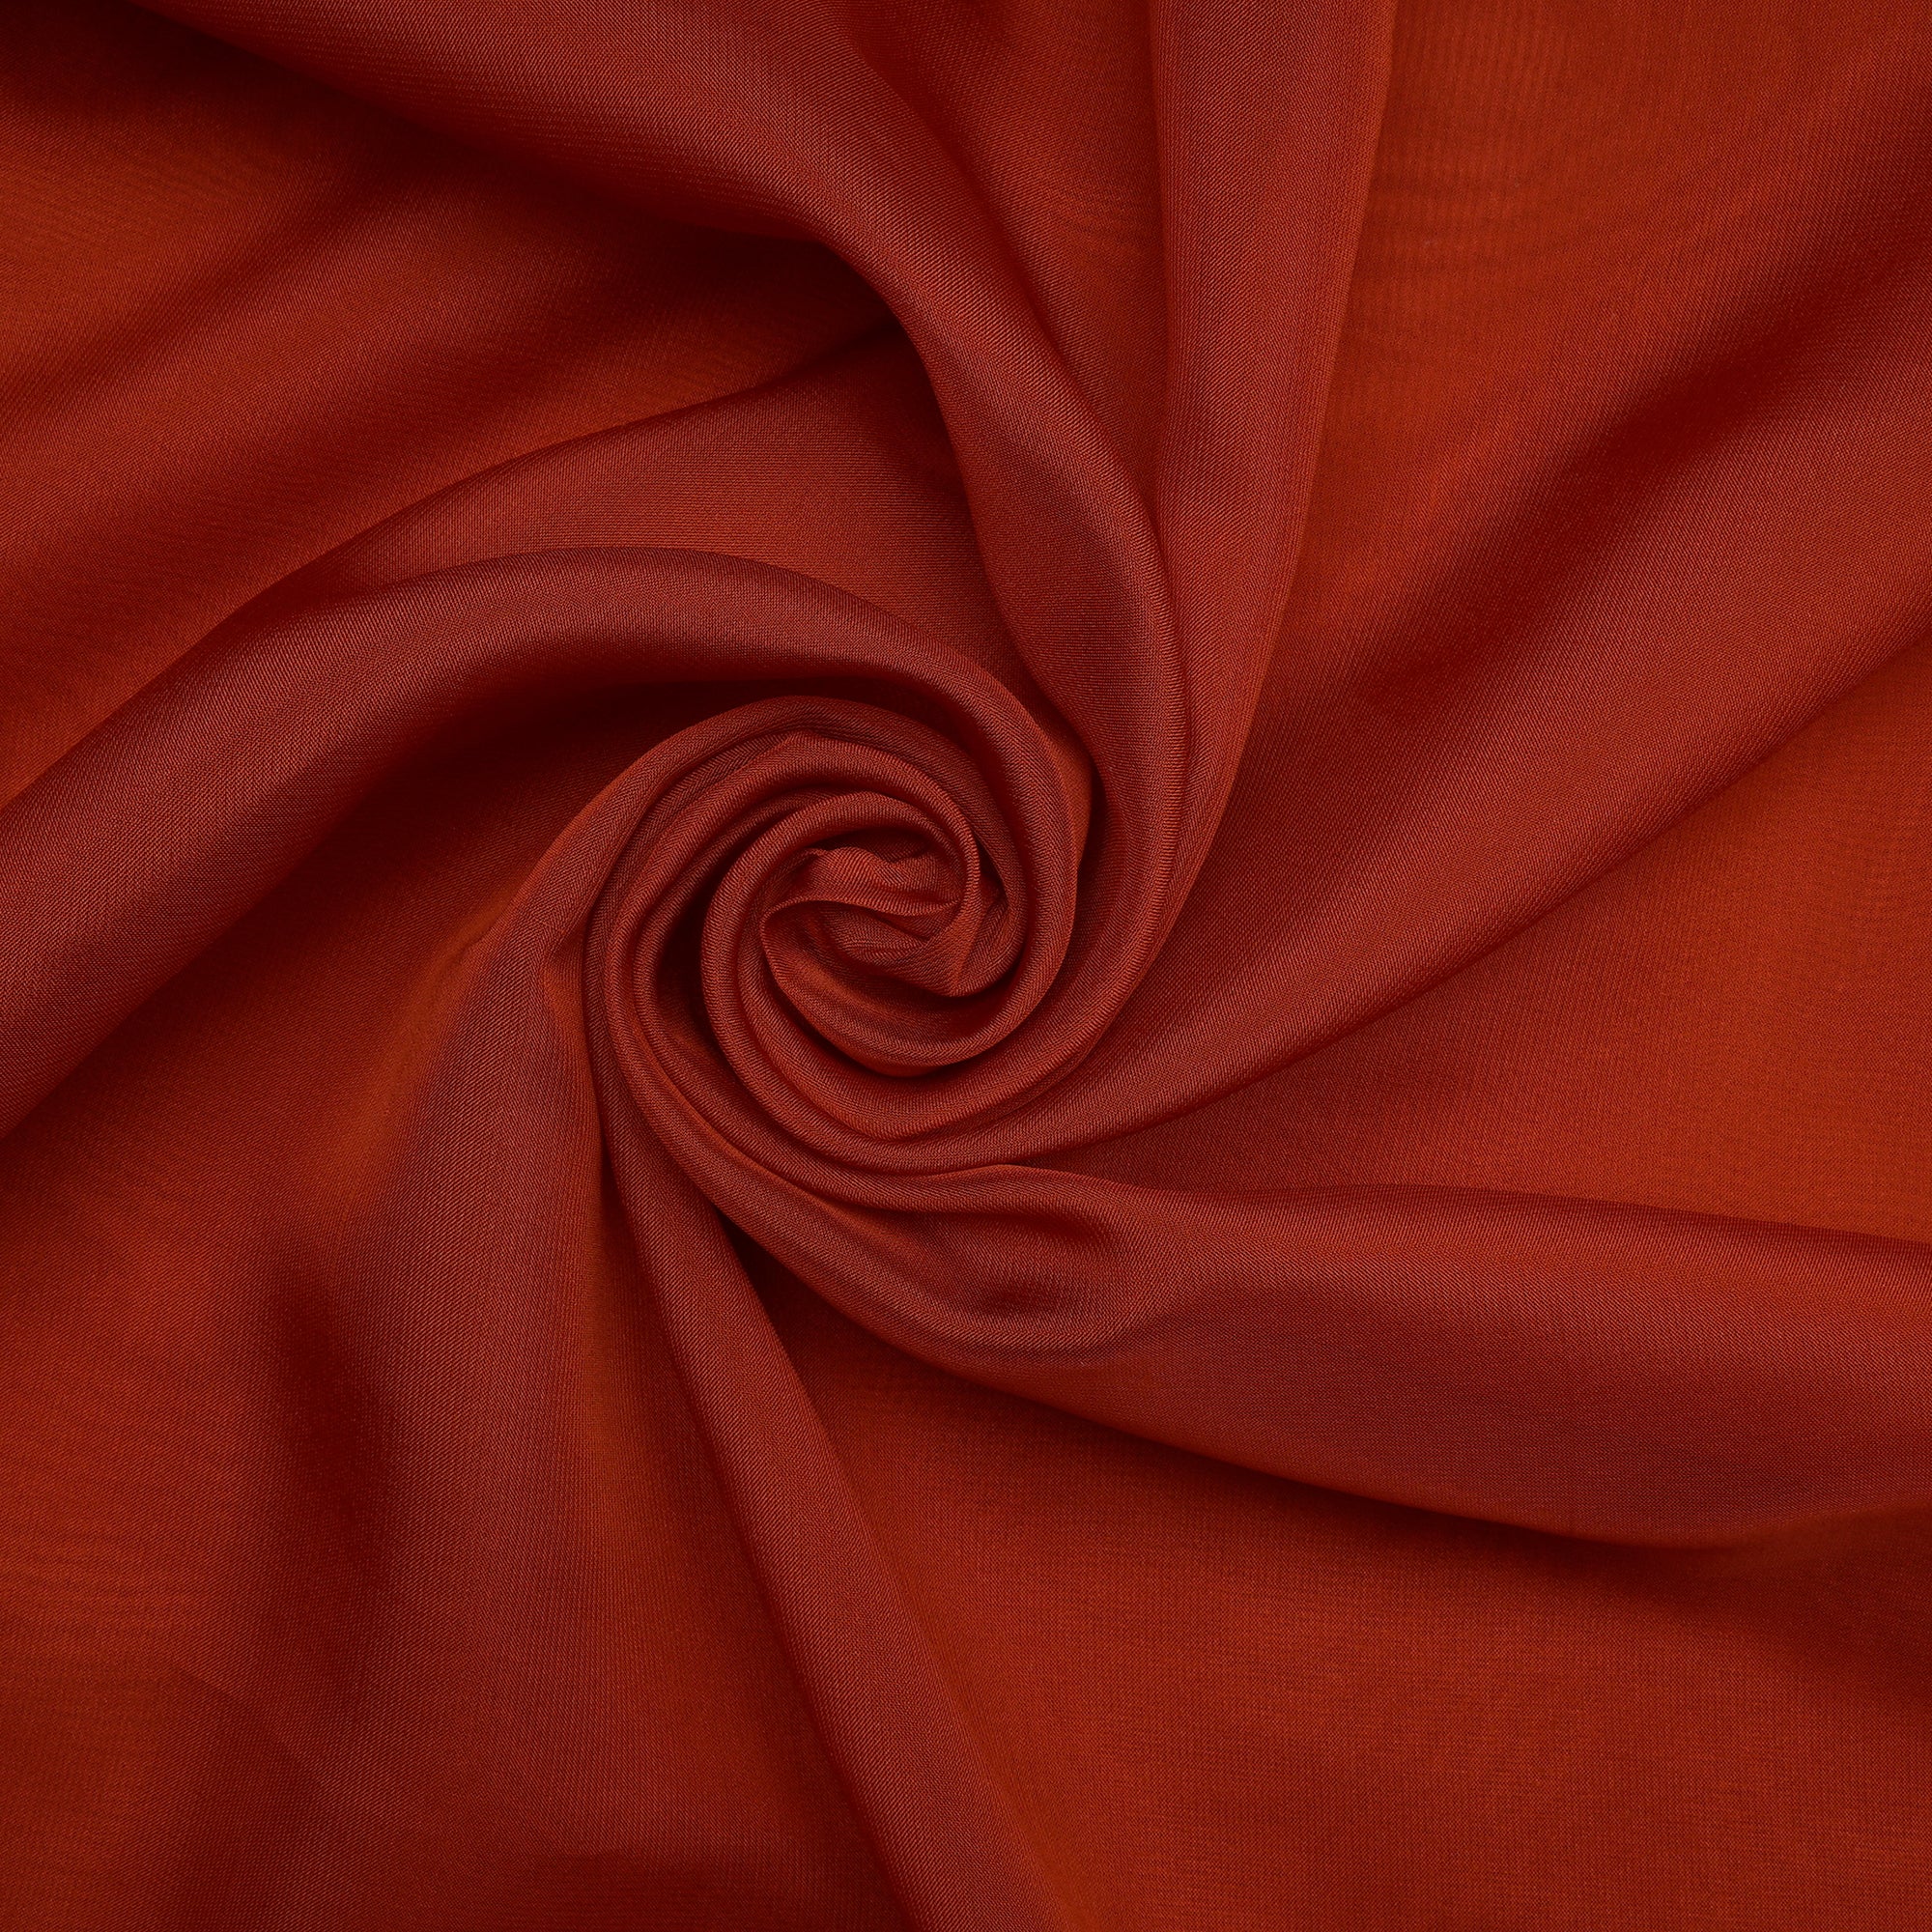 Vermilion Mill Dyed Viscose Organza Fabric